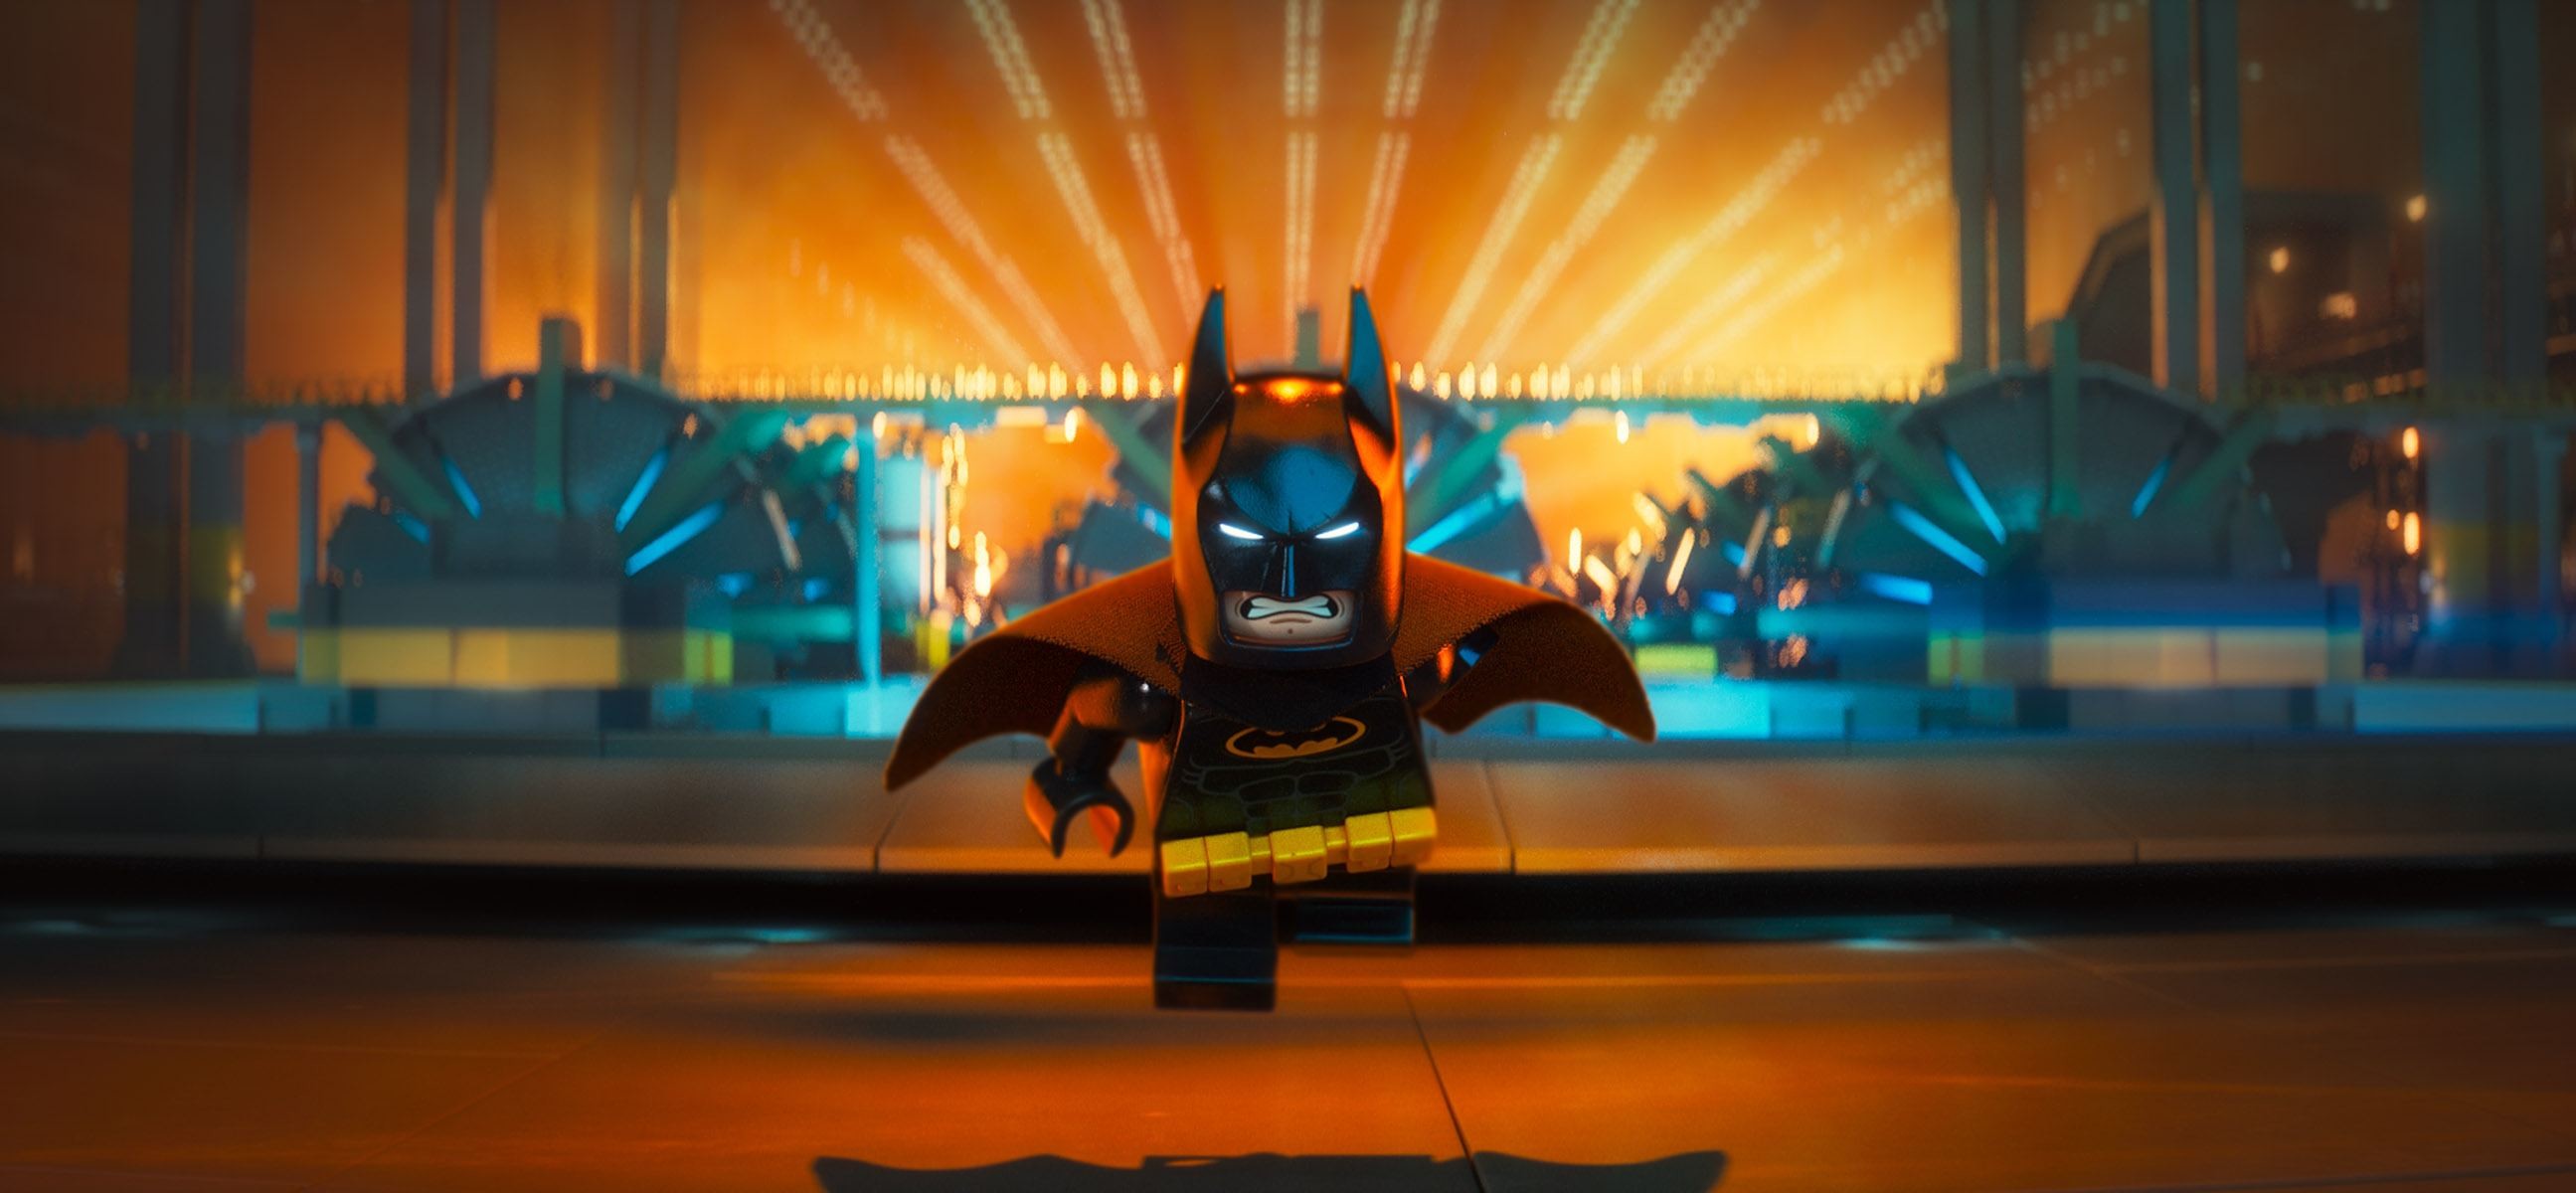 40 LEGO Batman Wallpaper Desktop  WallpaperSafari